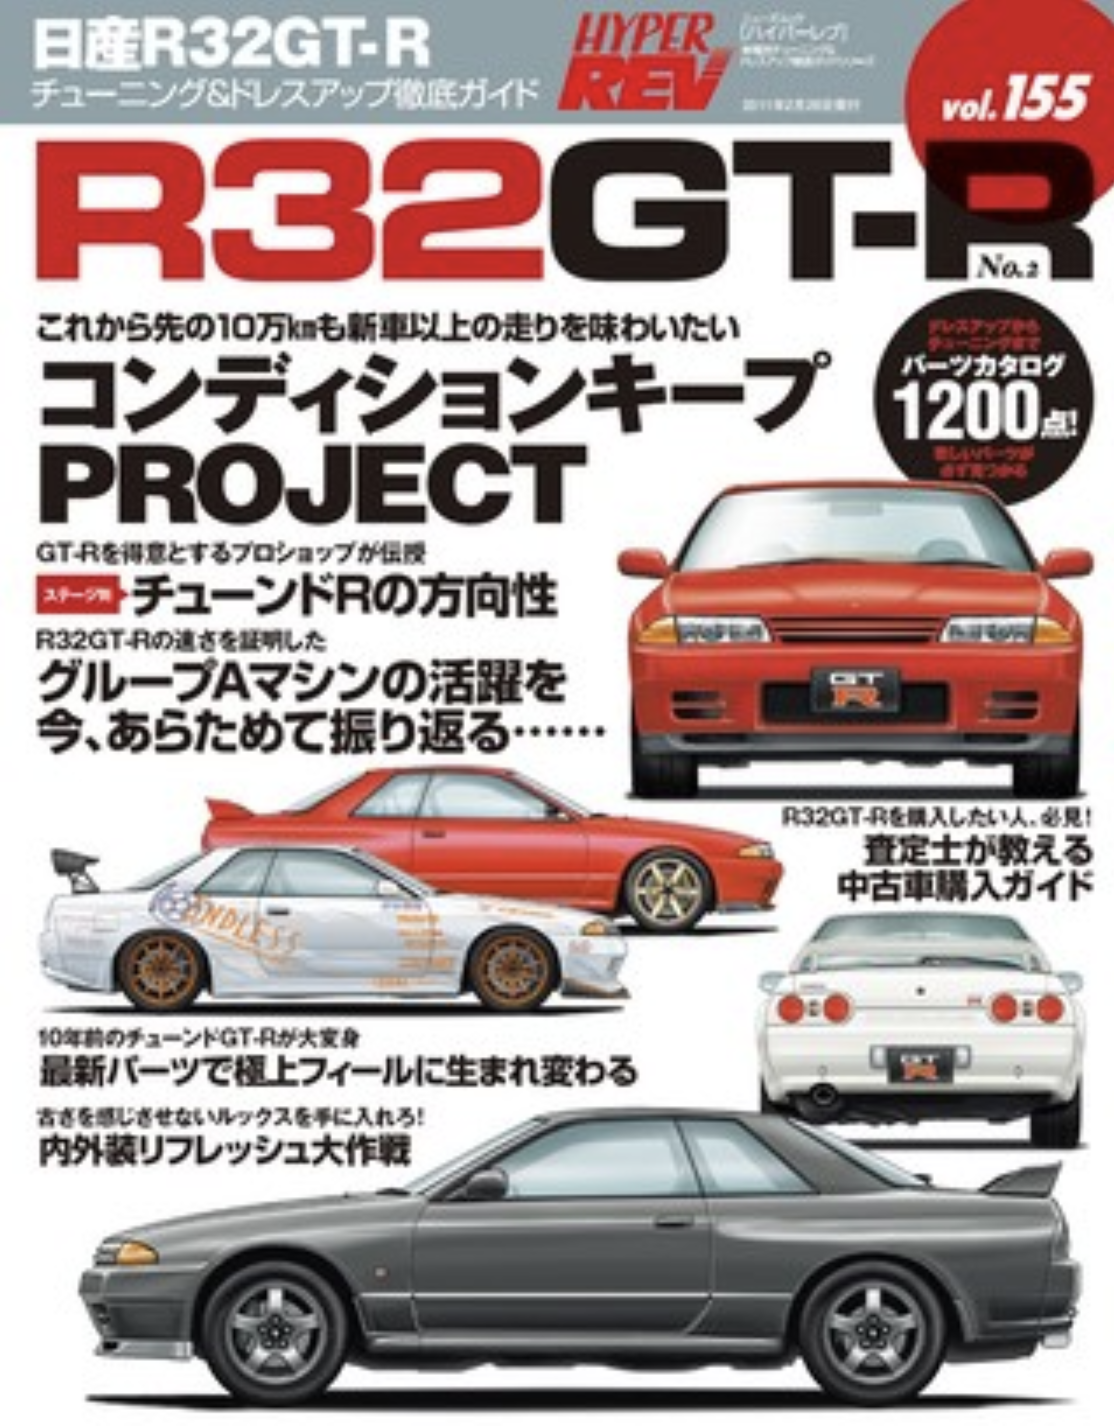 Hyper REV - Nissan Skyline R32 GT-R Vol 155